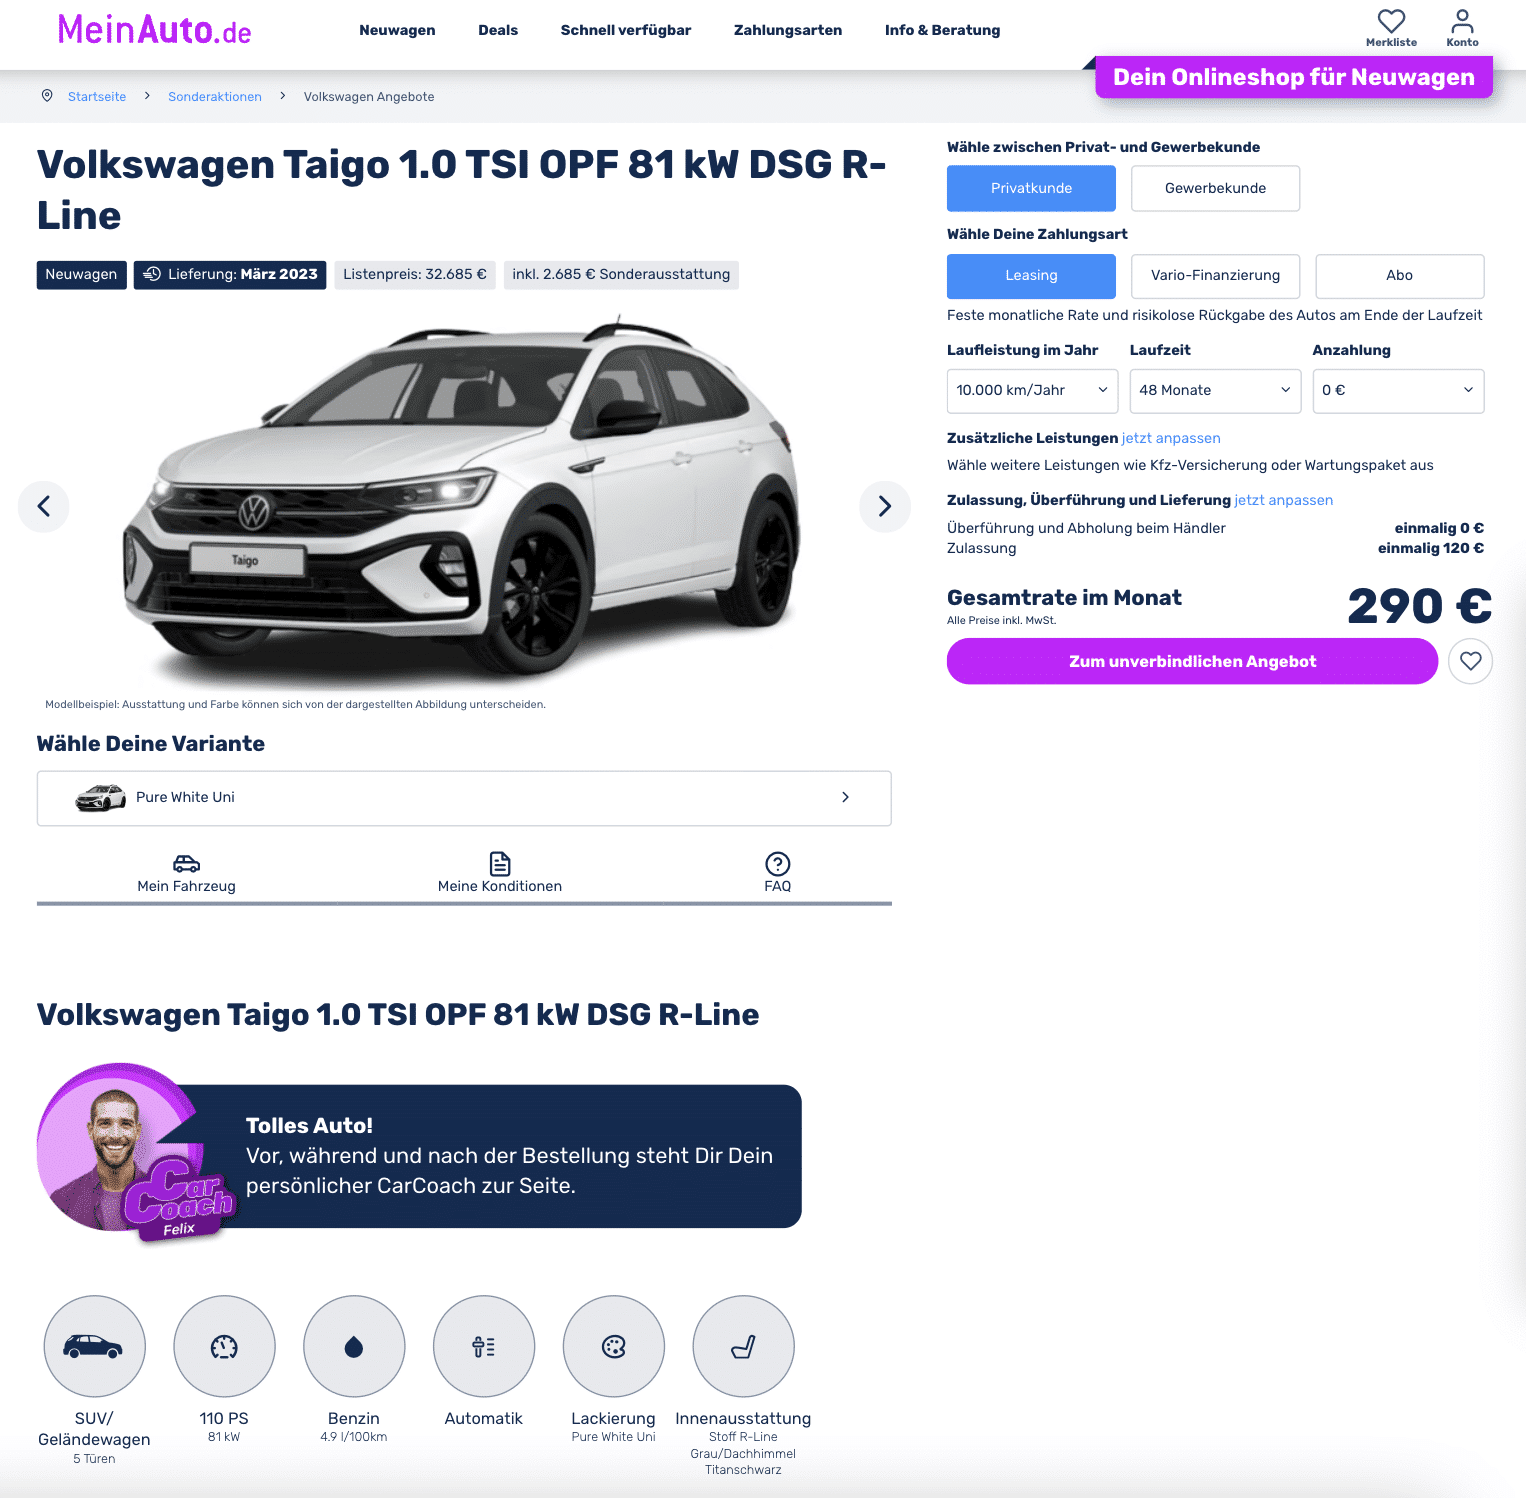 VW Taigo im Leasing für 290€ im Monat brutto - ntv Autoleasing